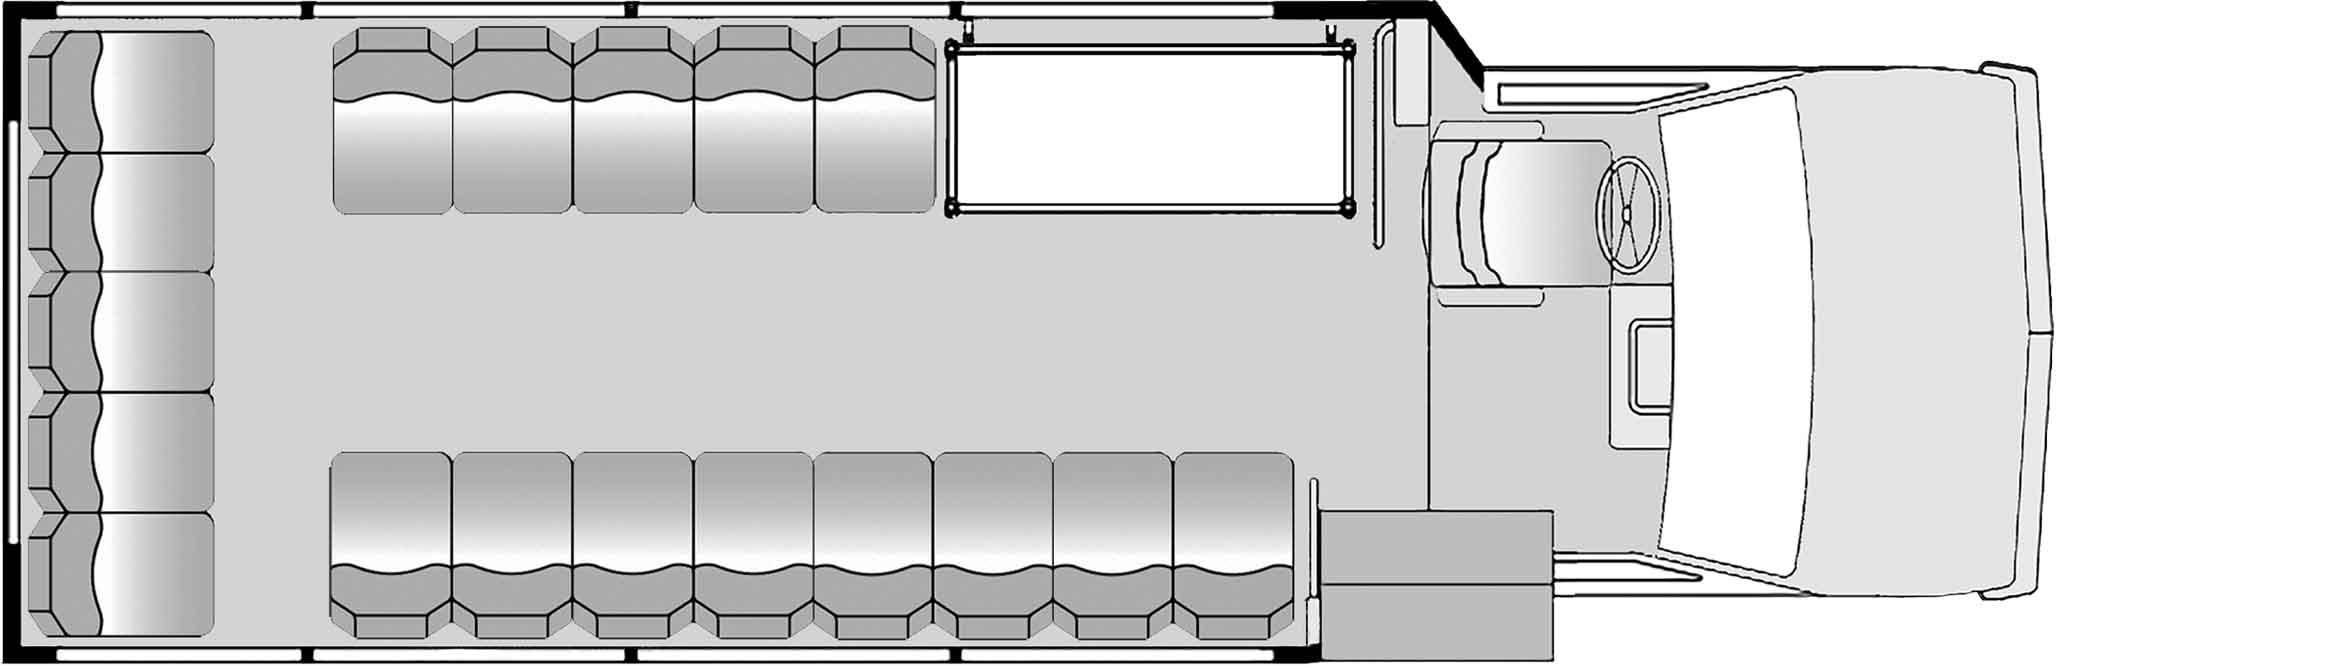 18 Passenger with Luggage Rack Plus Driver Floorplan Image